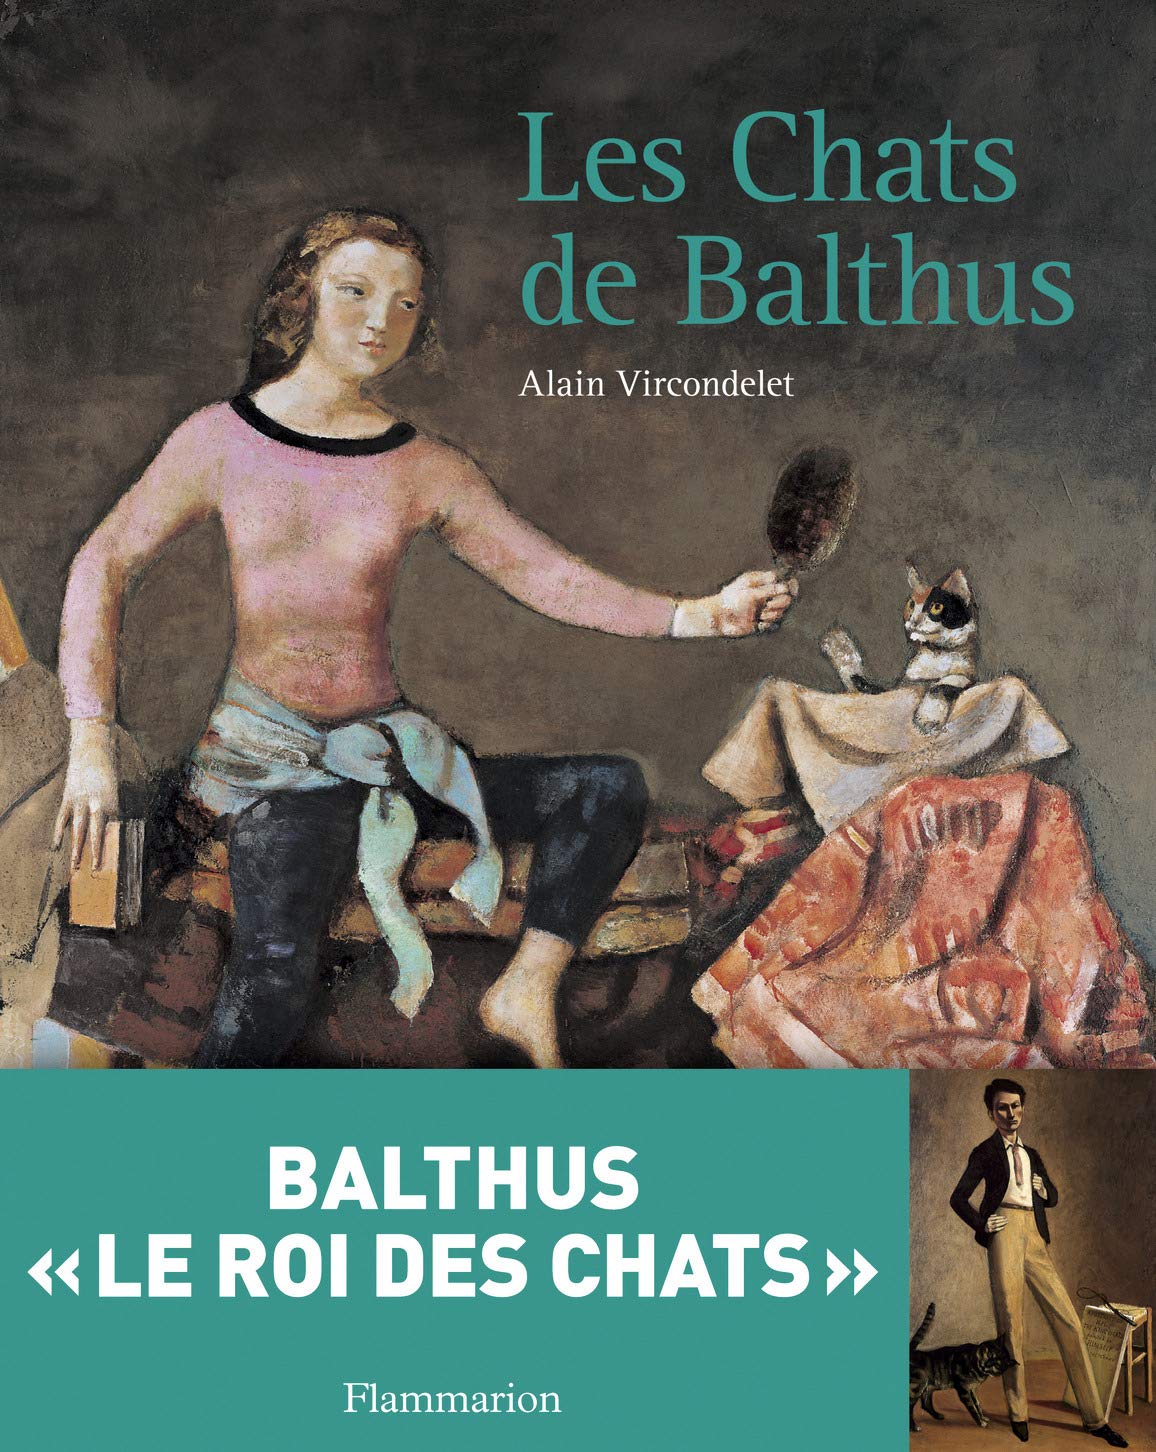 Les Chats de Balthus